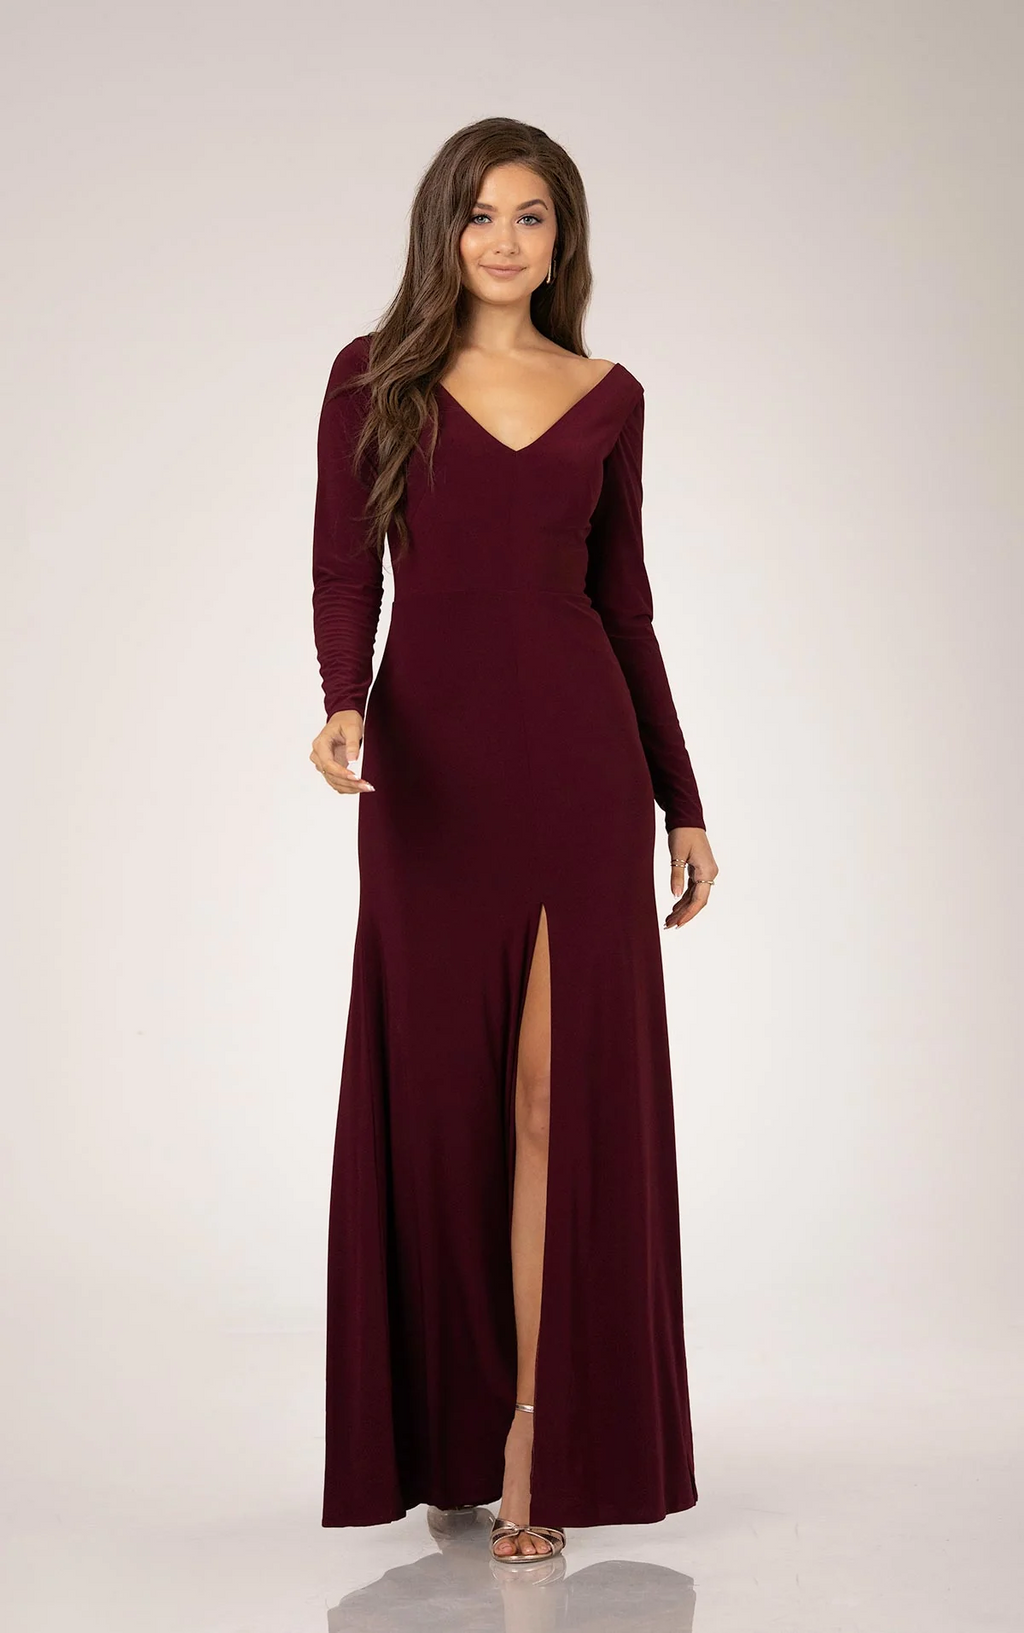 Sorella Vita Dress Style 9380 (Garnet-Size 10) Prom, Ball., Black-tie, Bridesmaid, Pageant